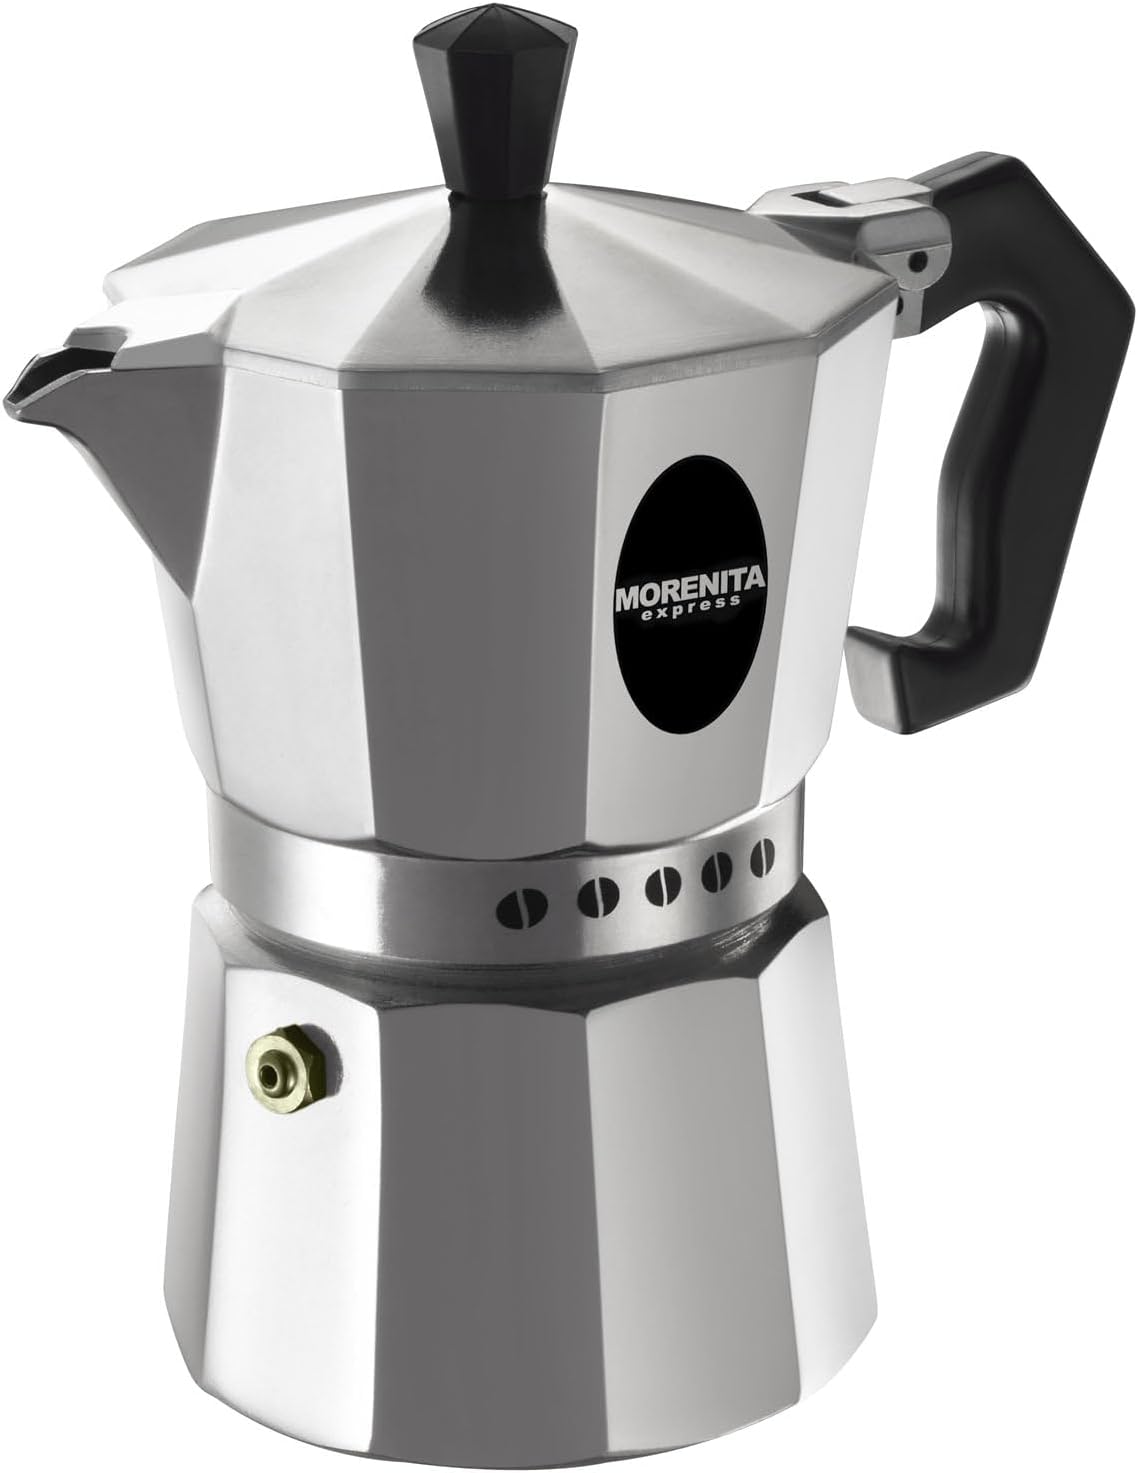 Aeternum 5971 Morenita espresso maker made of aluminum for 1 cup, silver